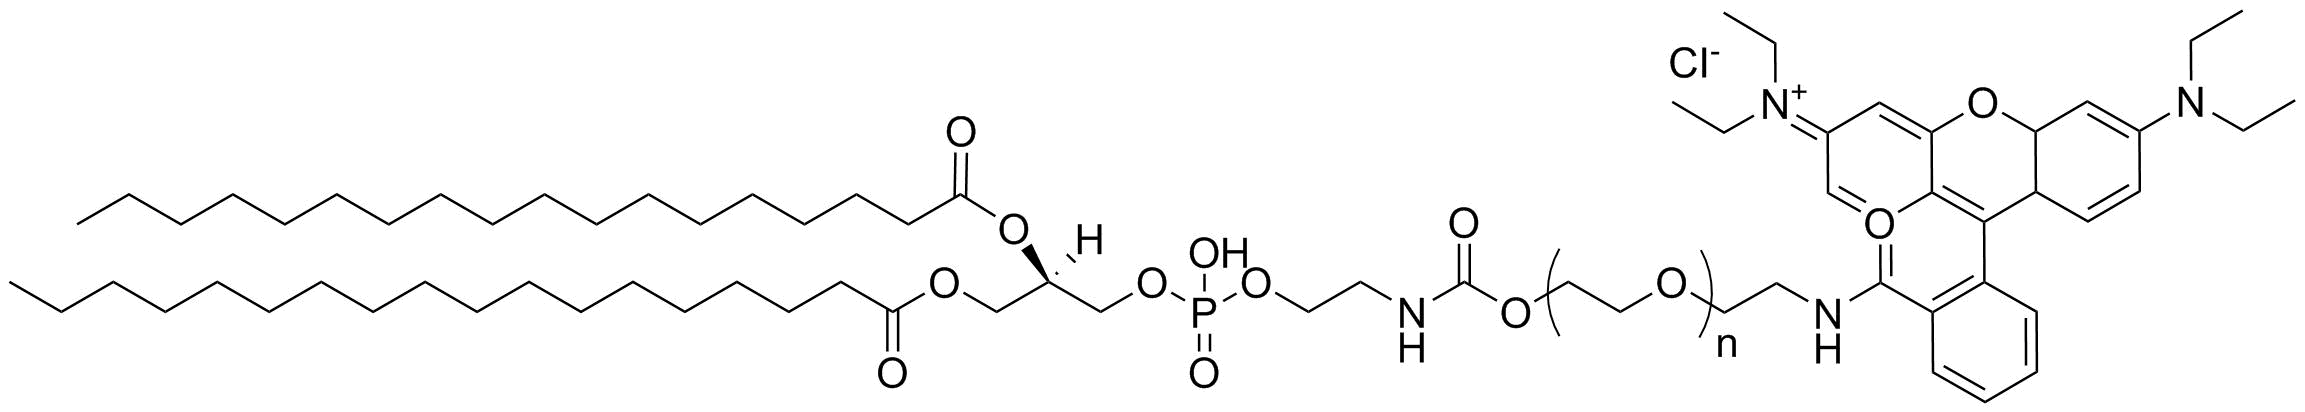 DSPE-PEG-Rhodamine, MW 1K